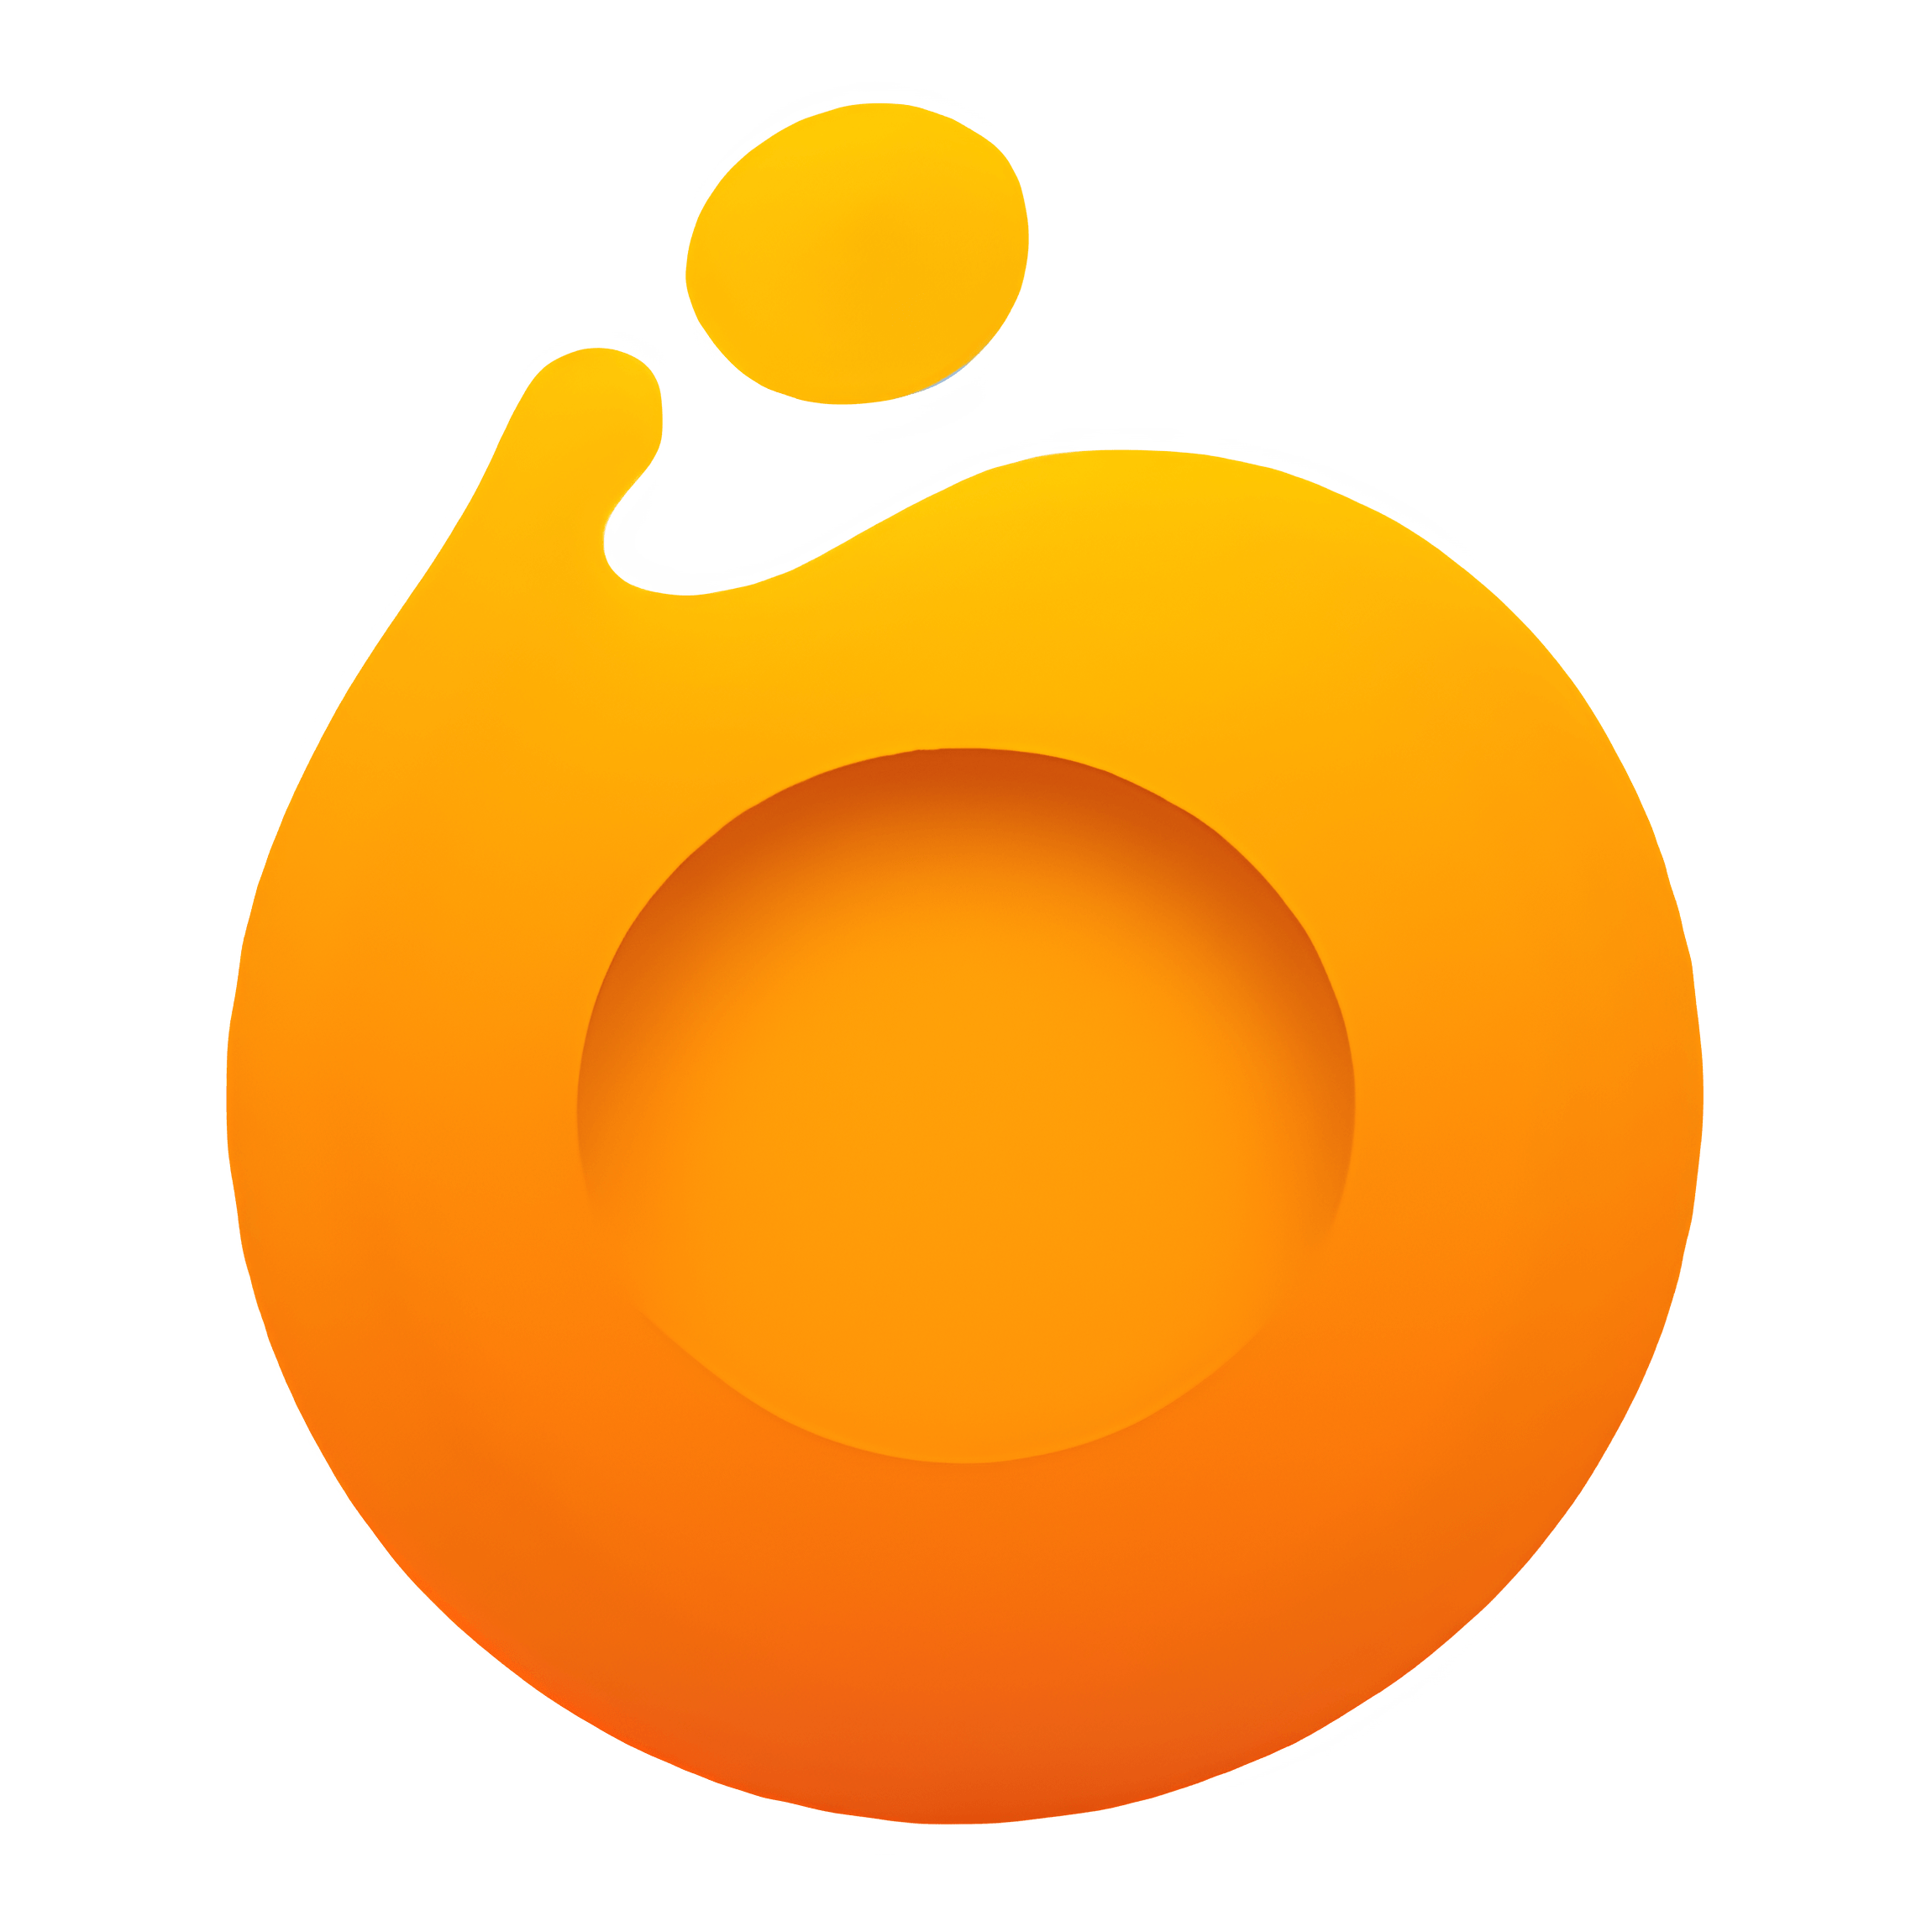 juice logo